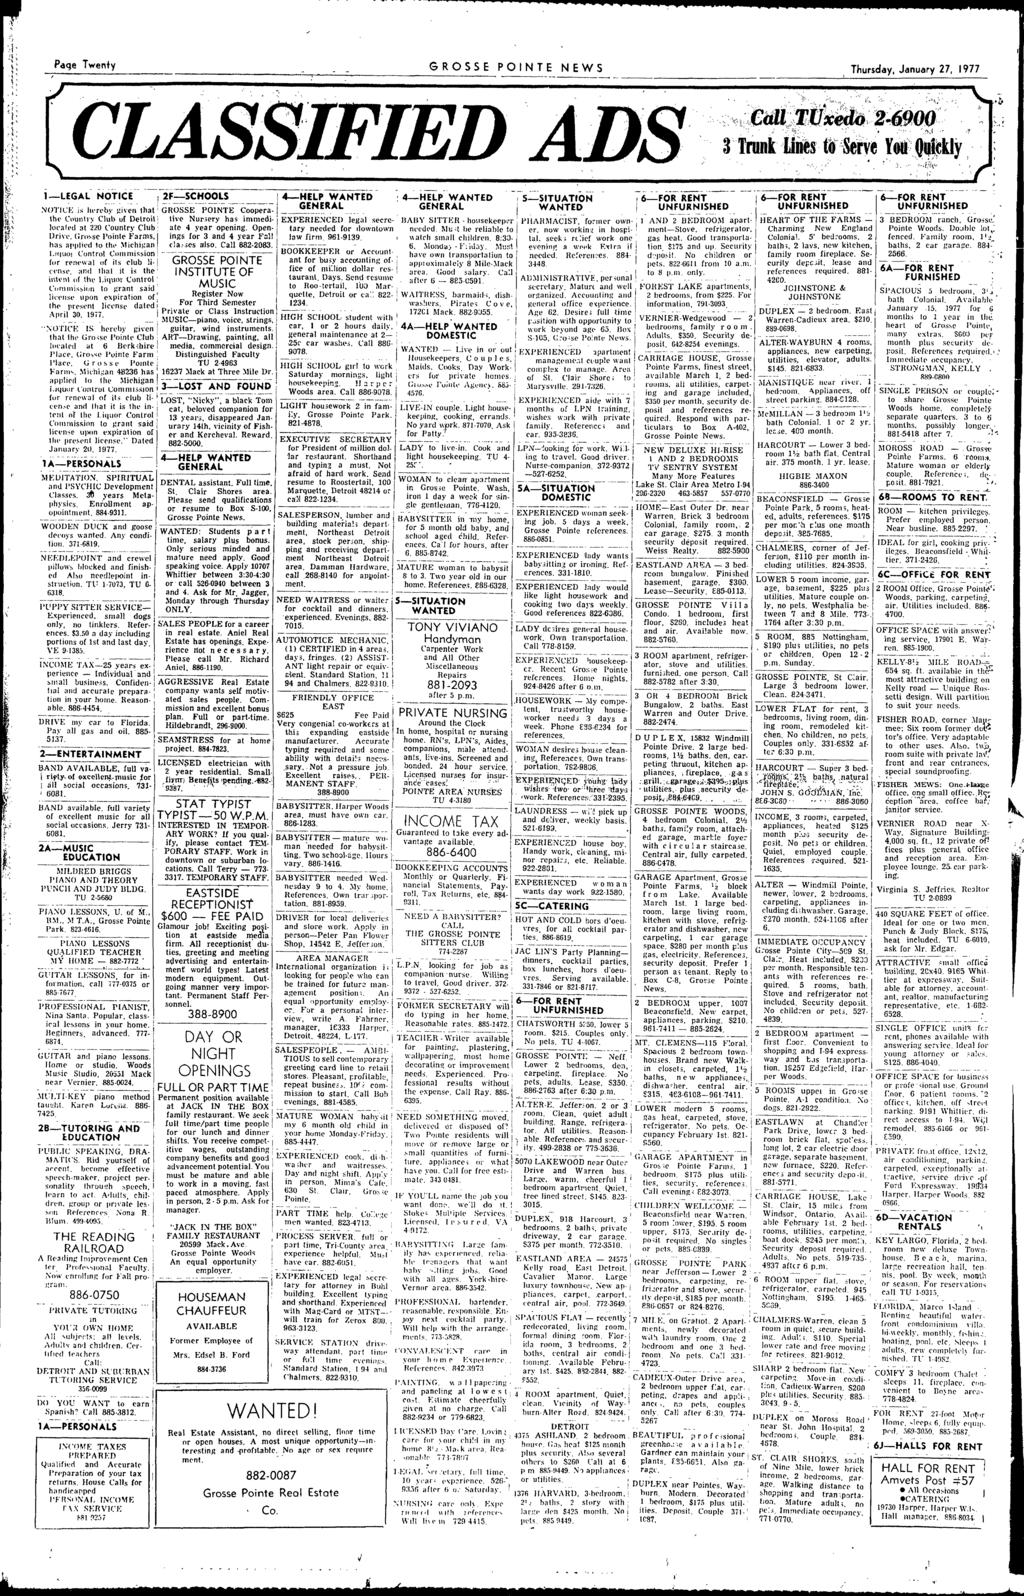 : " Page Twenty GROSSE PONTE NEWS Thursday January 27 1977 CLASSFEDADS \: k ----- --------- ---- i-legal NOTCE-- '--ij:=-schooa:s--- 4-HELPWANTEO- : 4-HELP WANTED --S'=':STUATON FOR'RENT''- 6-FOR